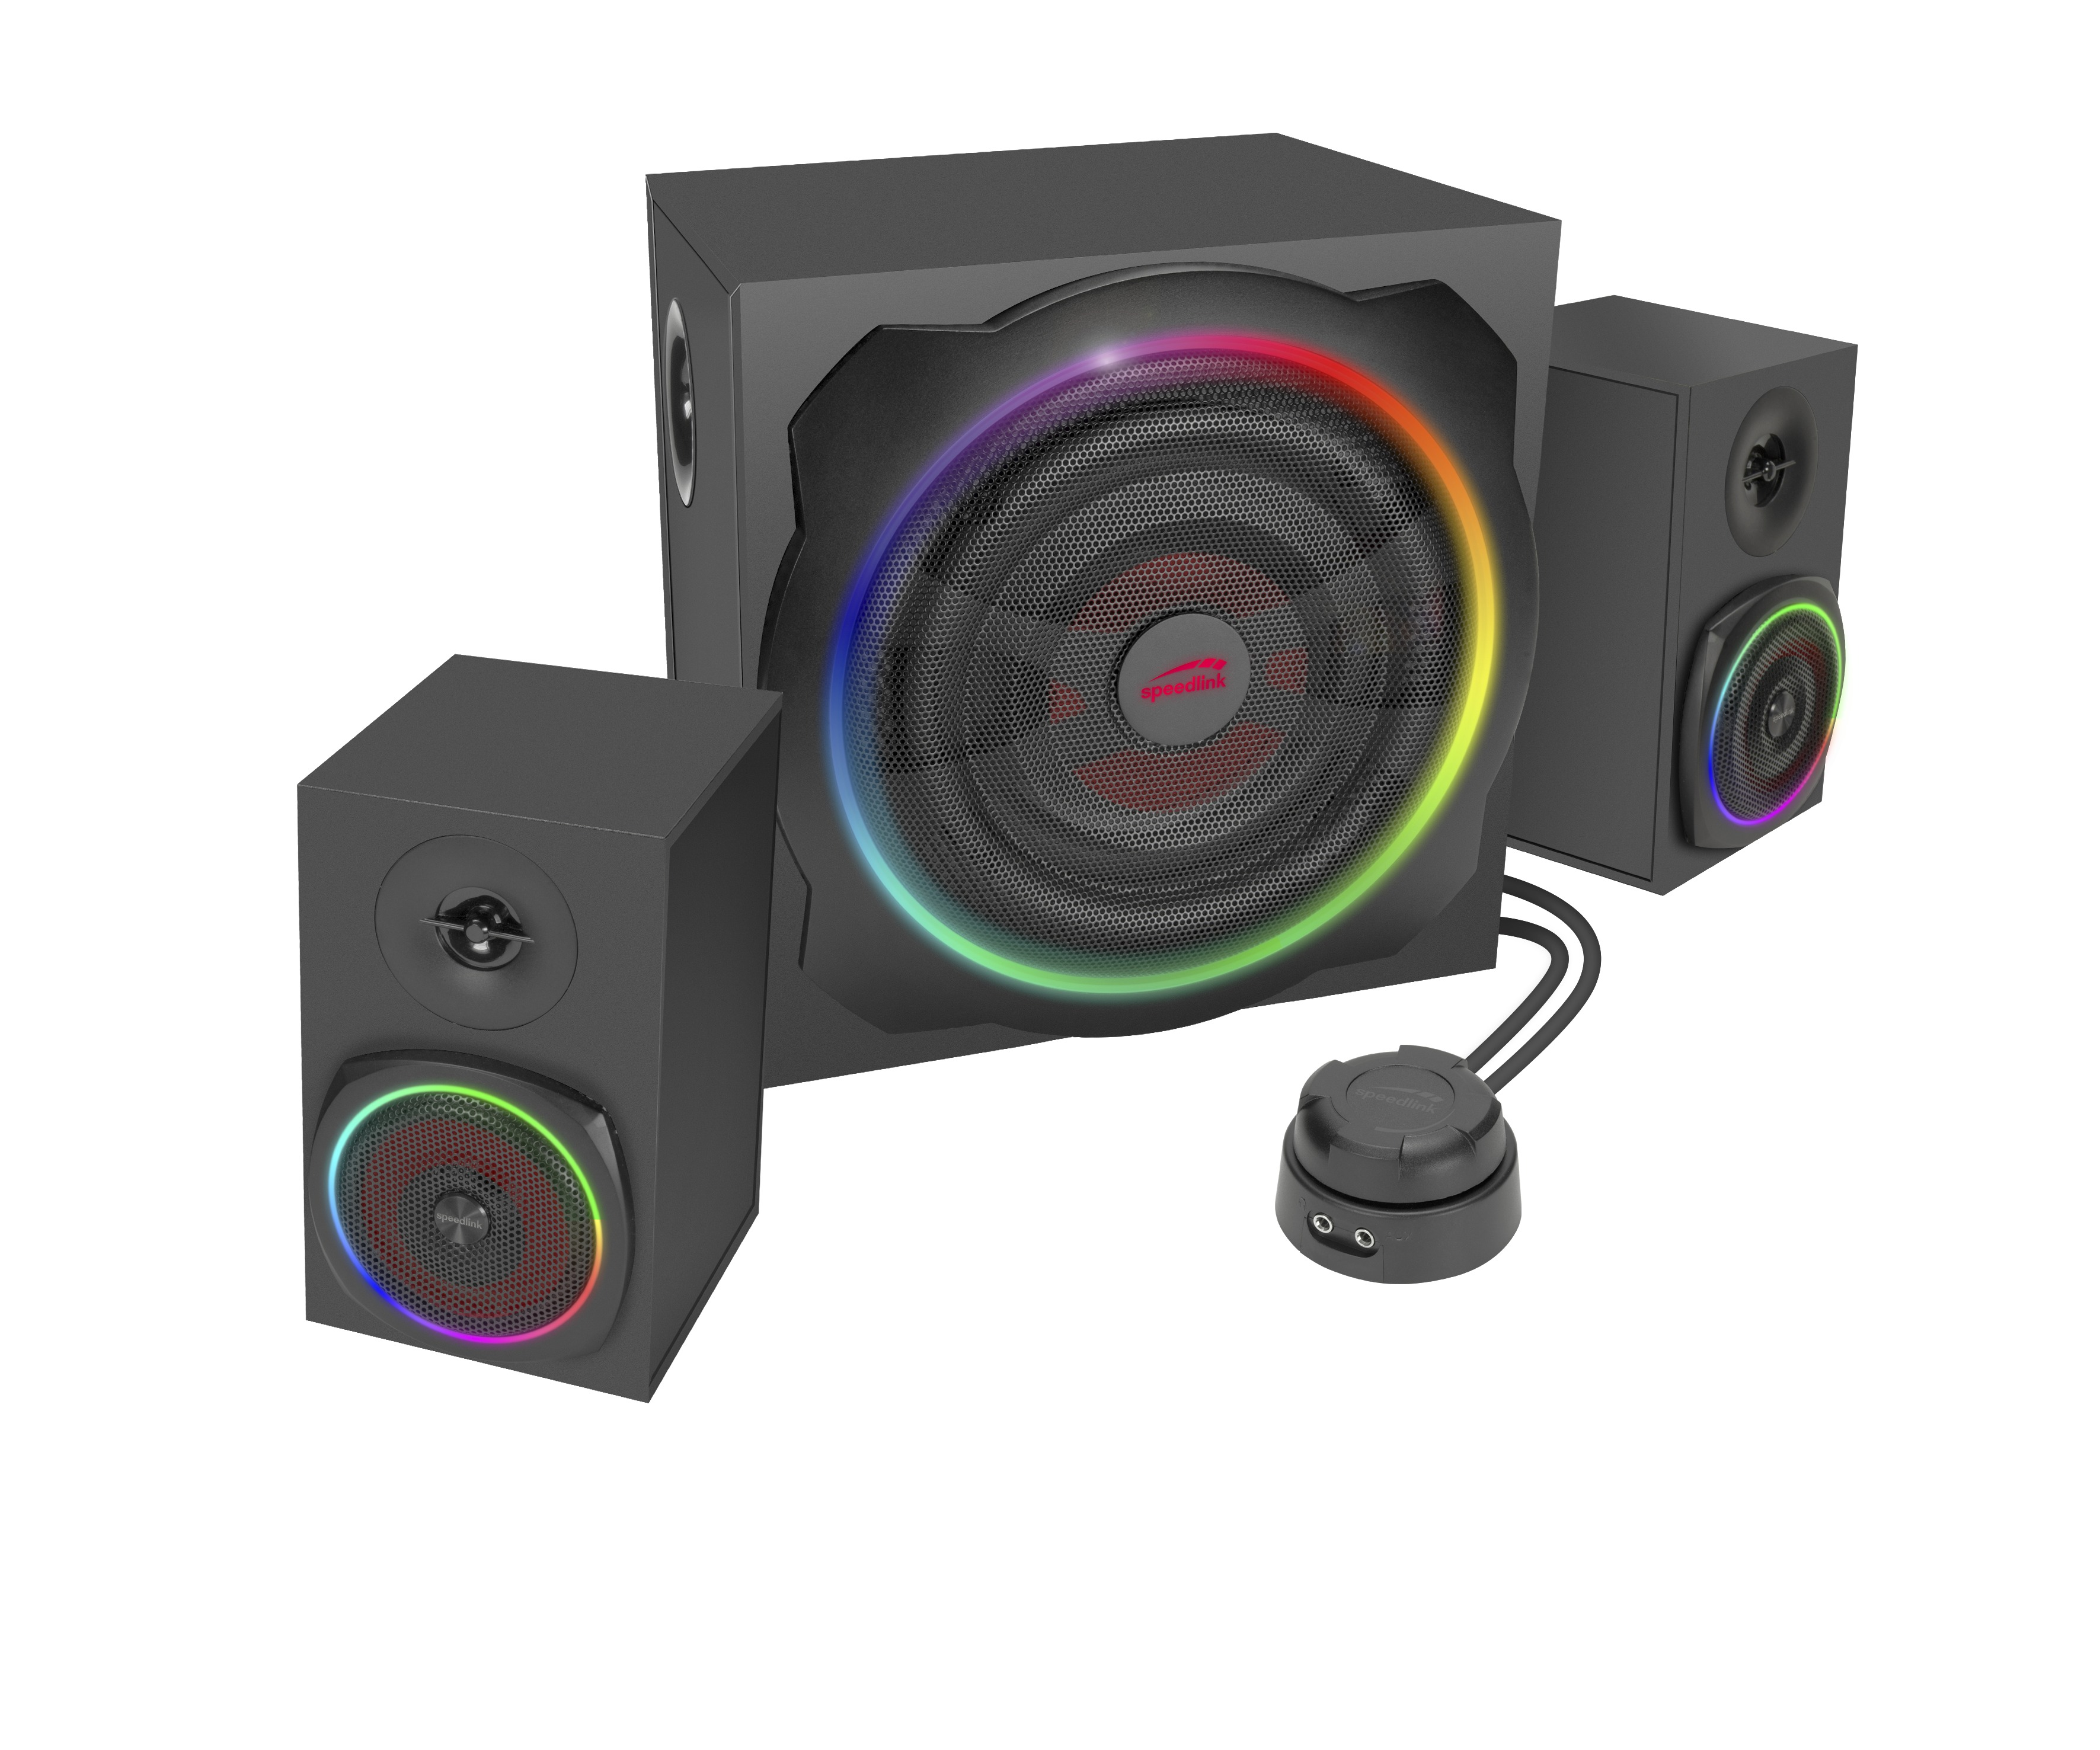 GRAVITY SPEEDLINK RGB 2.1-Lautsprechersystem